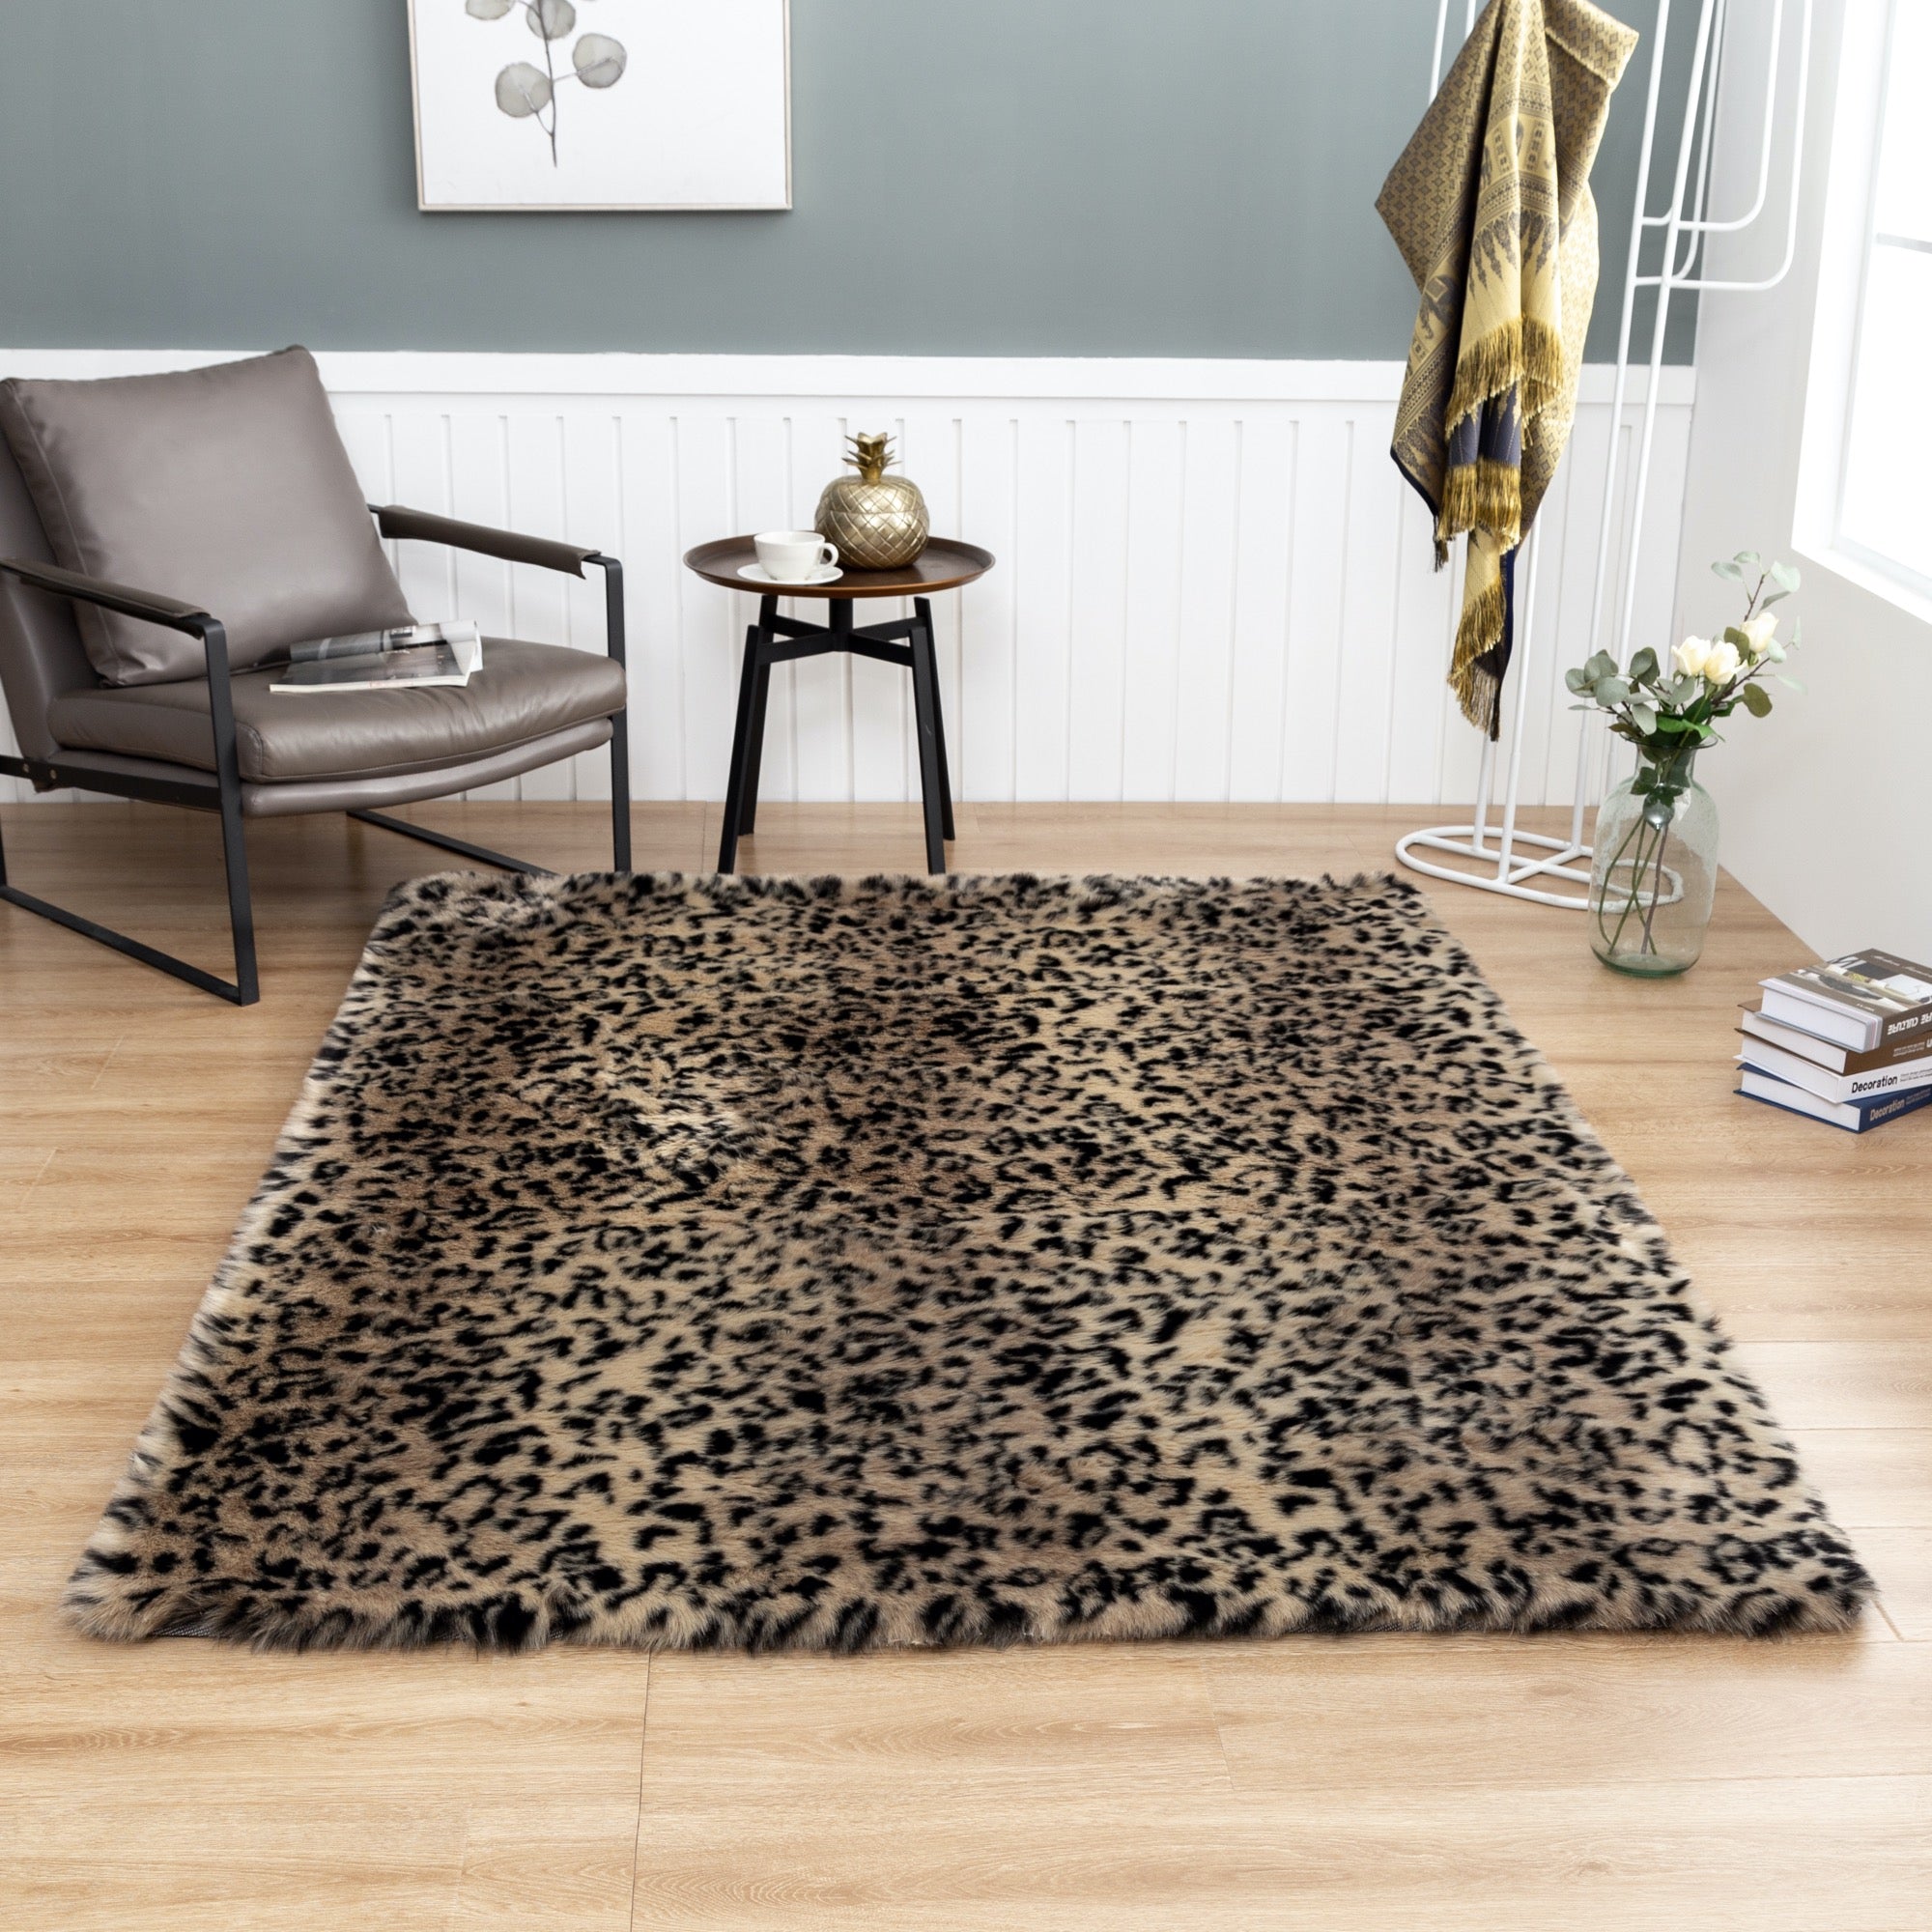 Leopard fur texture stock image. Image of animal, interior